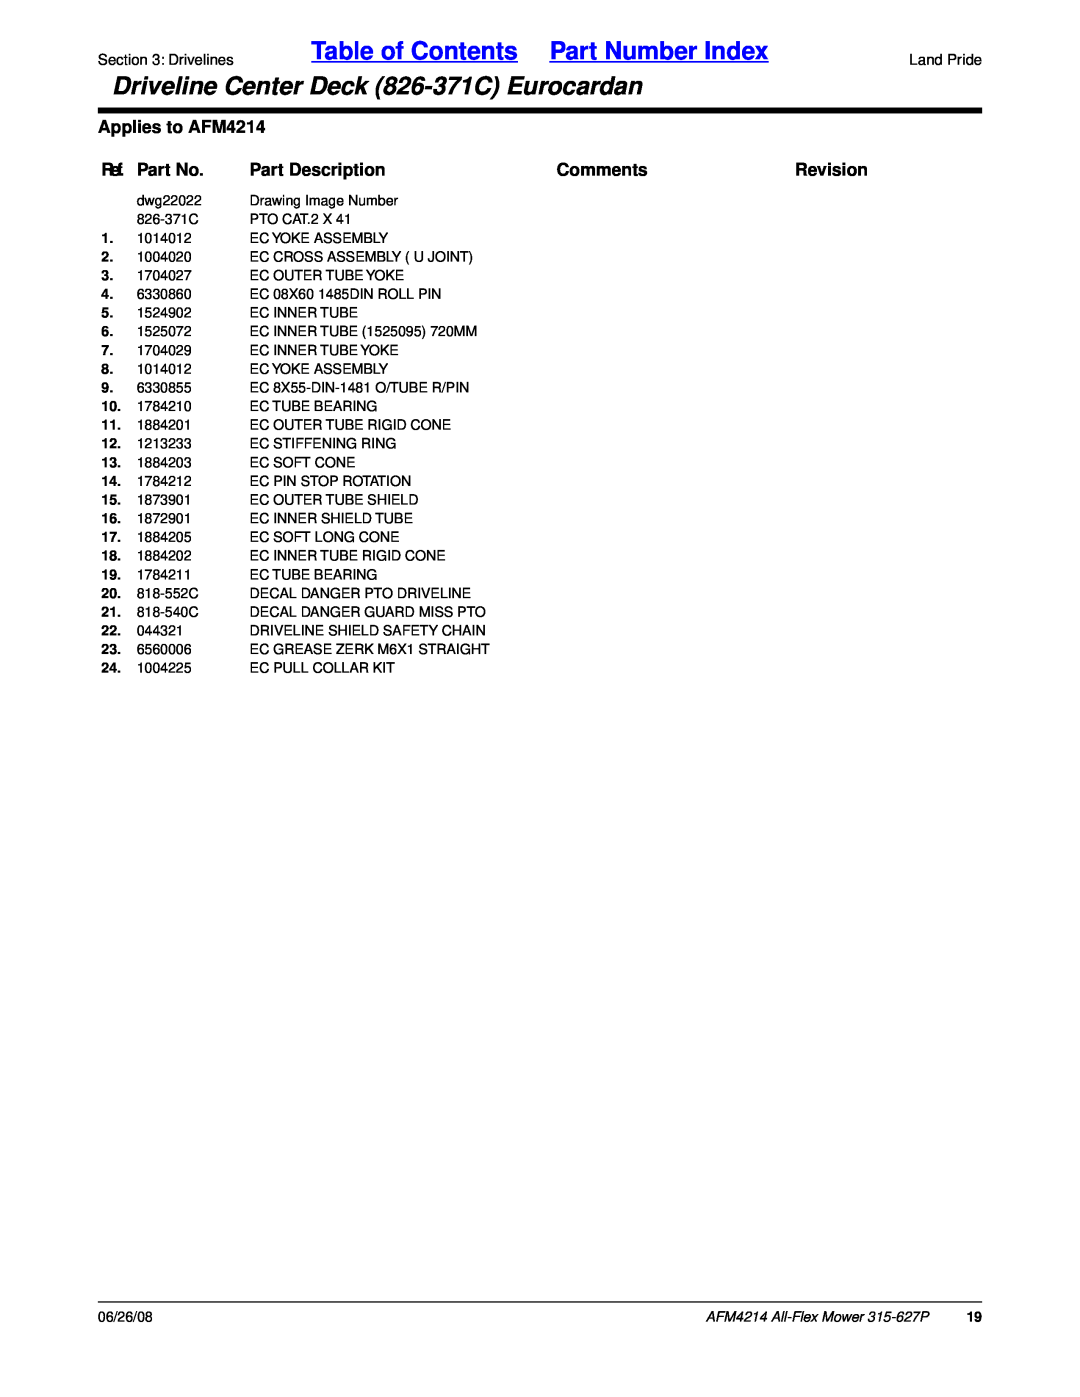 Land Pride Table of Contents Part Number Index, Driveline Center Deck 826-371CEurocardan, Applies to AFM4214, Comments 